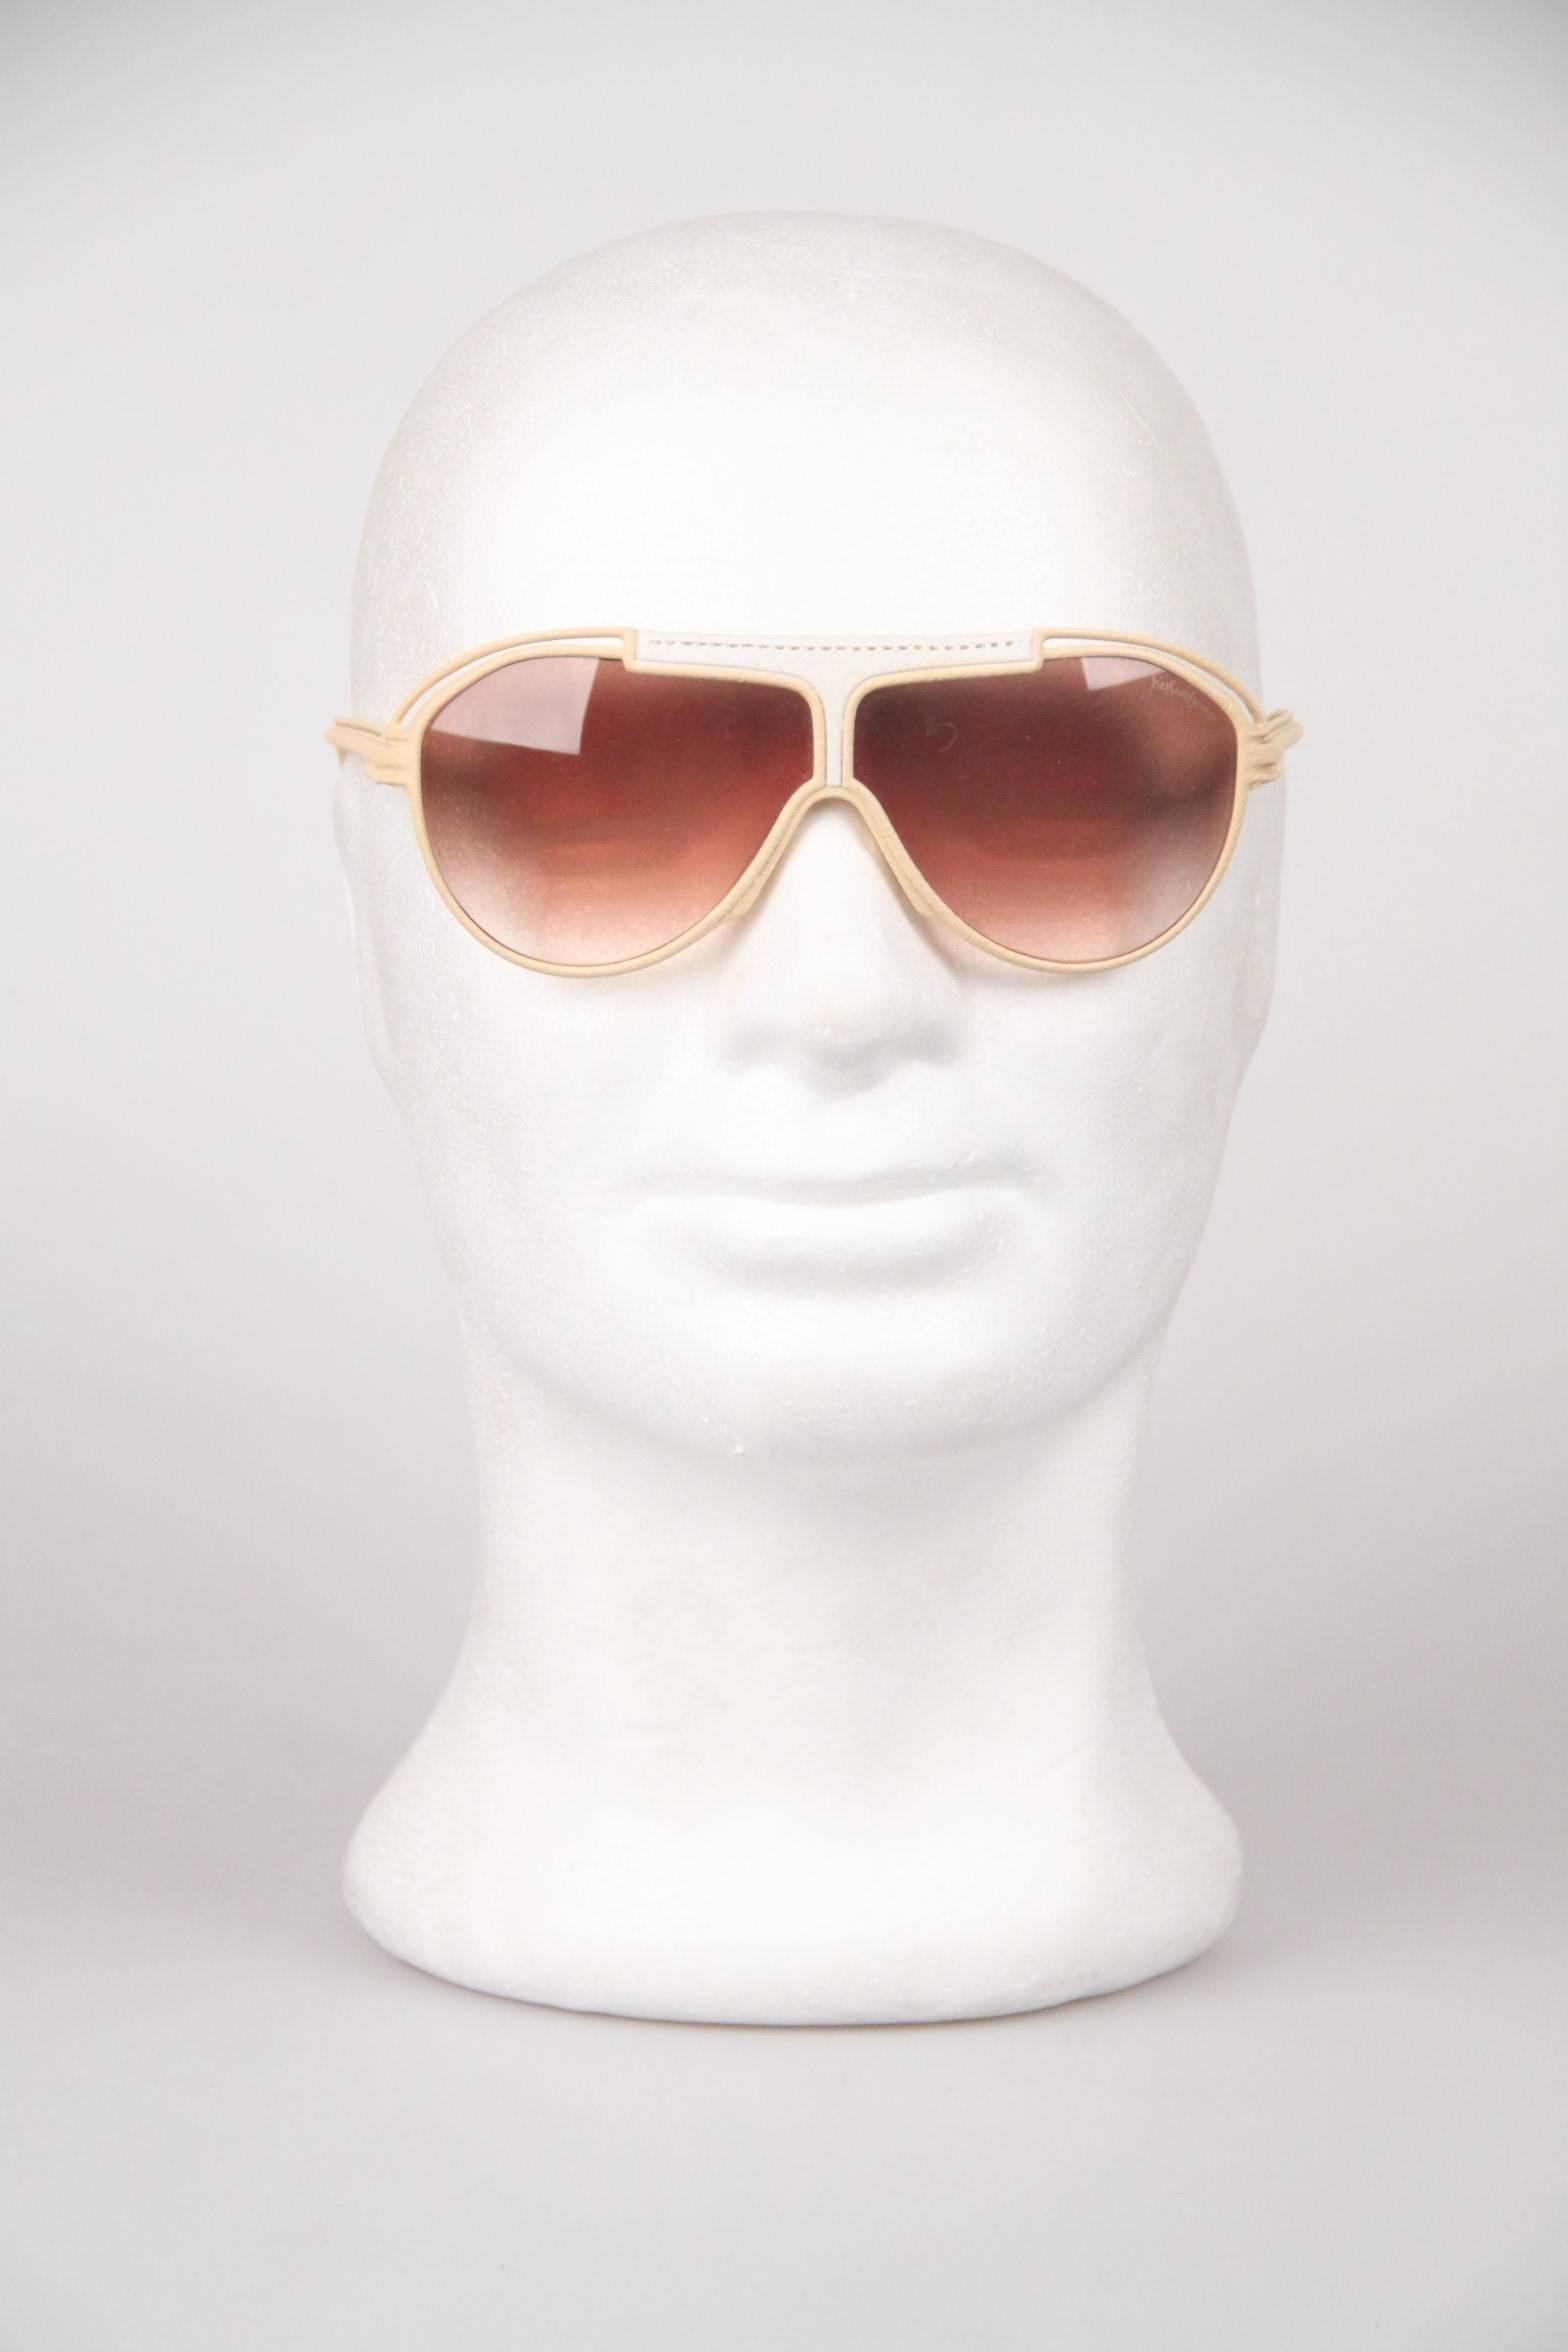 Yves Saint Laurent Vintage Mint Sunglasses Tan Leather Aviator 8359 Y90 4